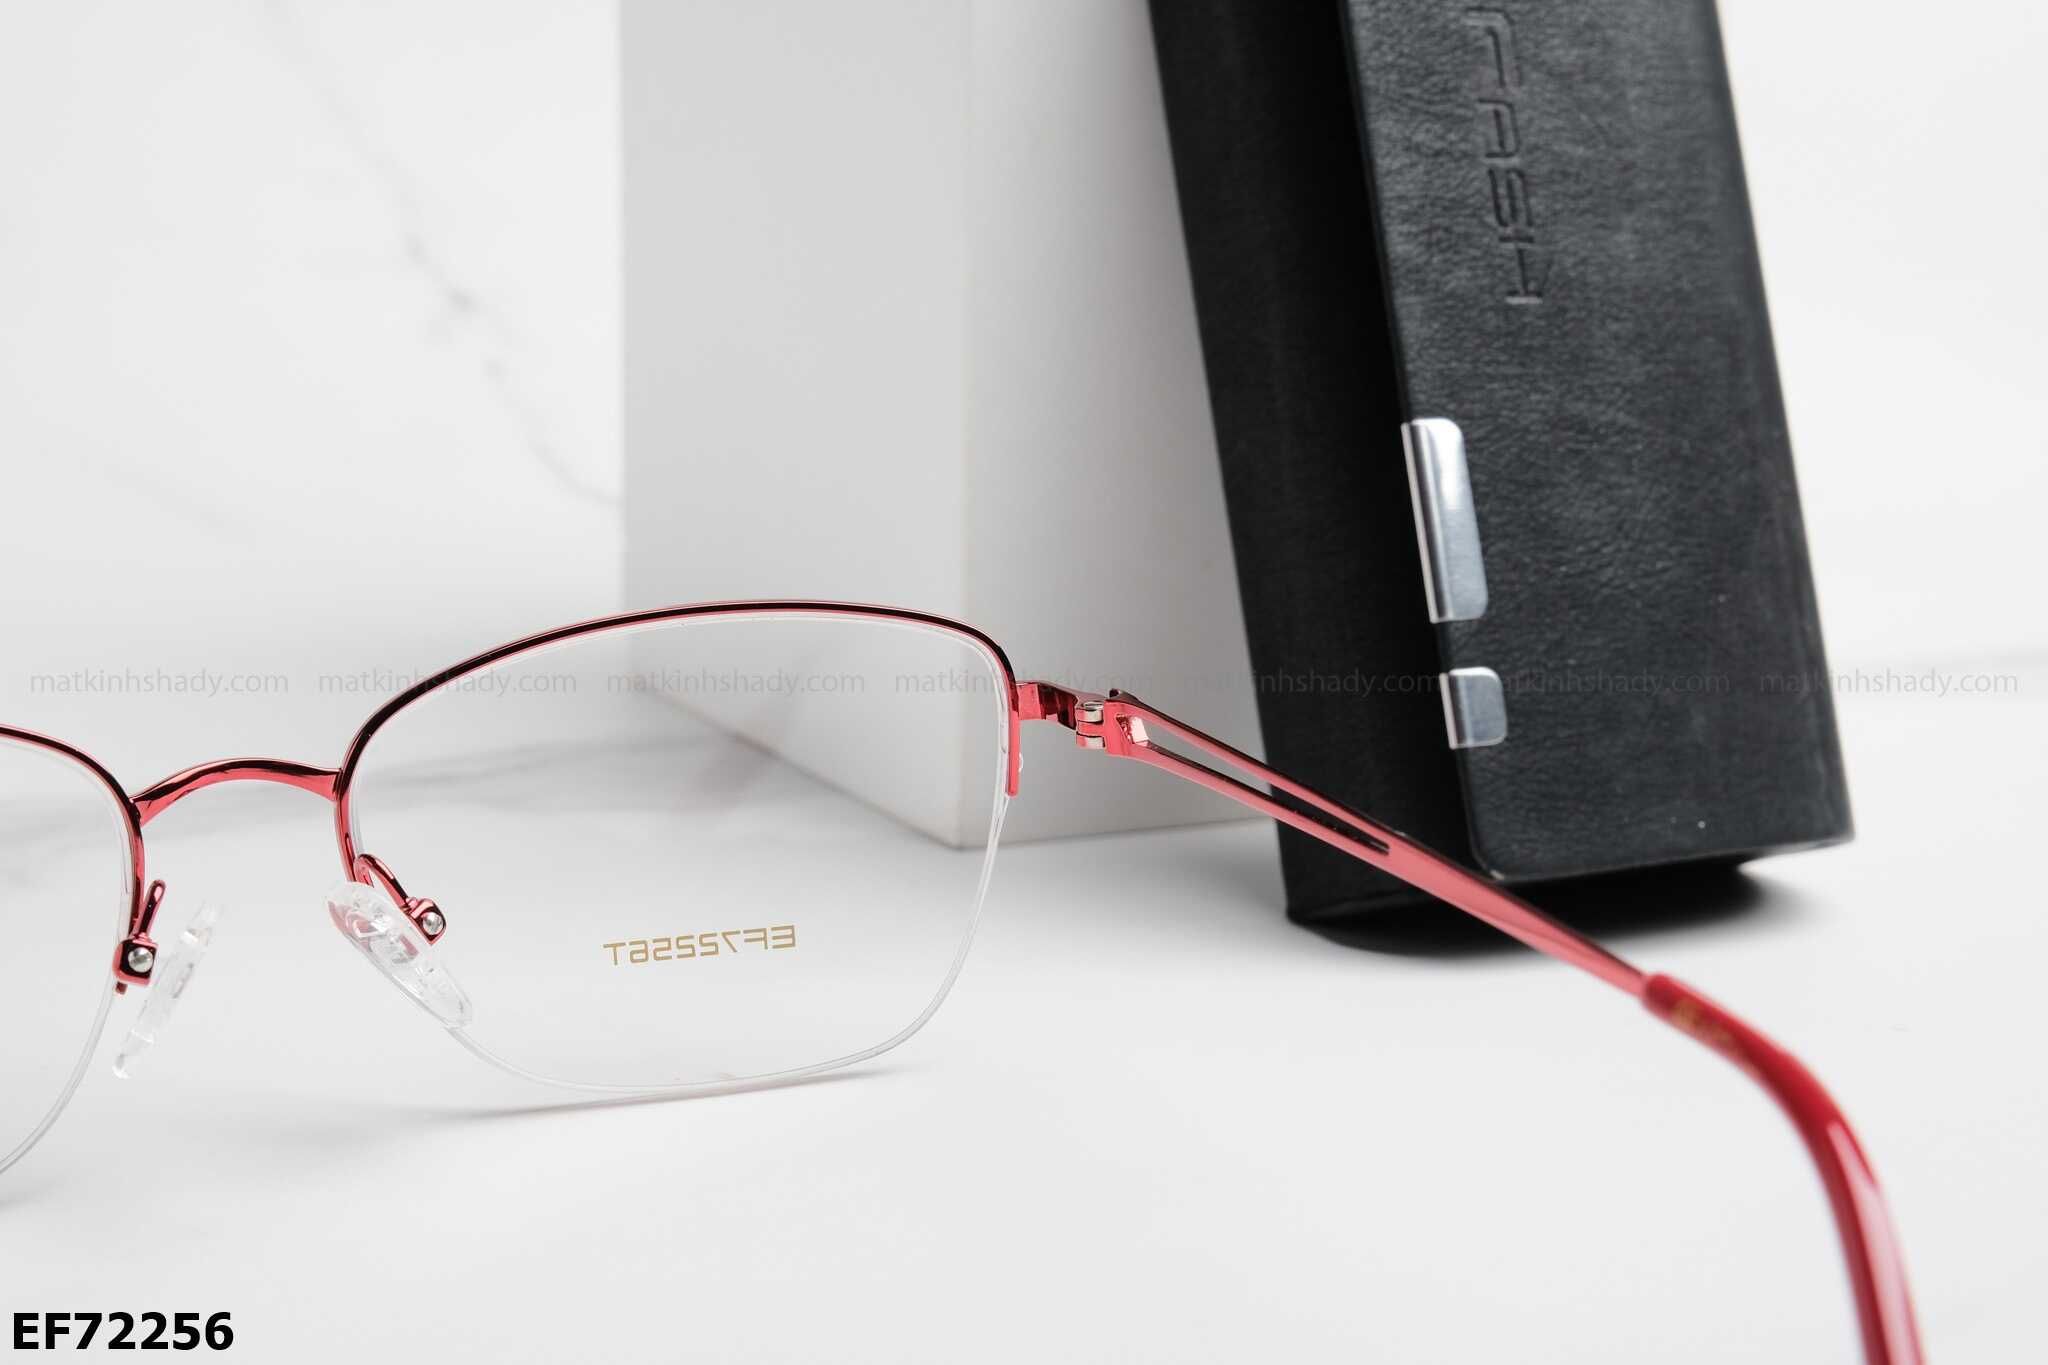  Exfash Eyewear - Glasses - EF72256 